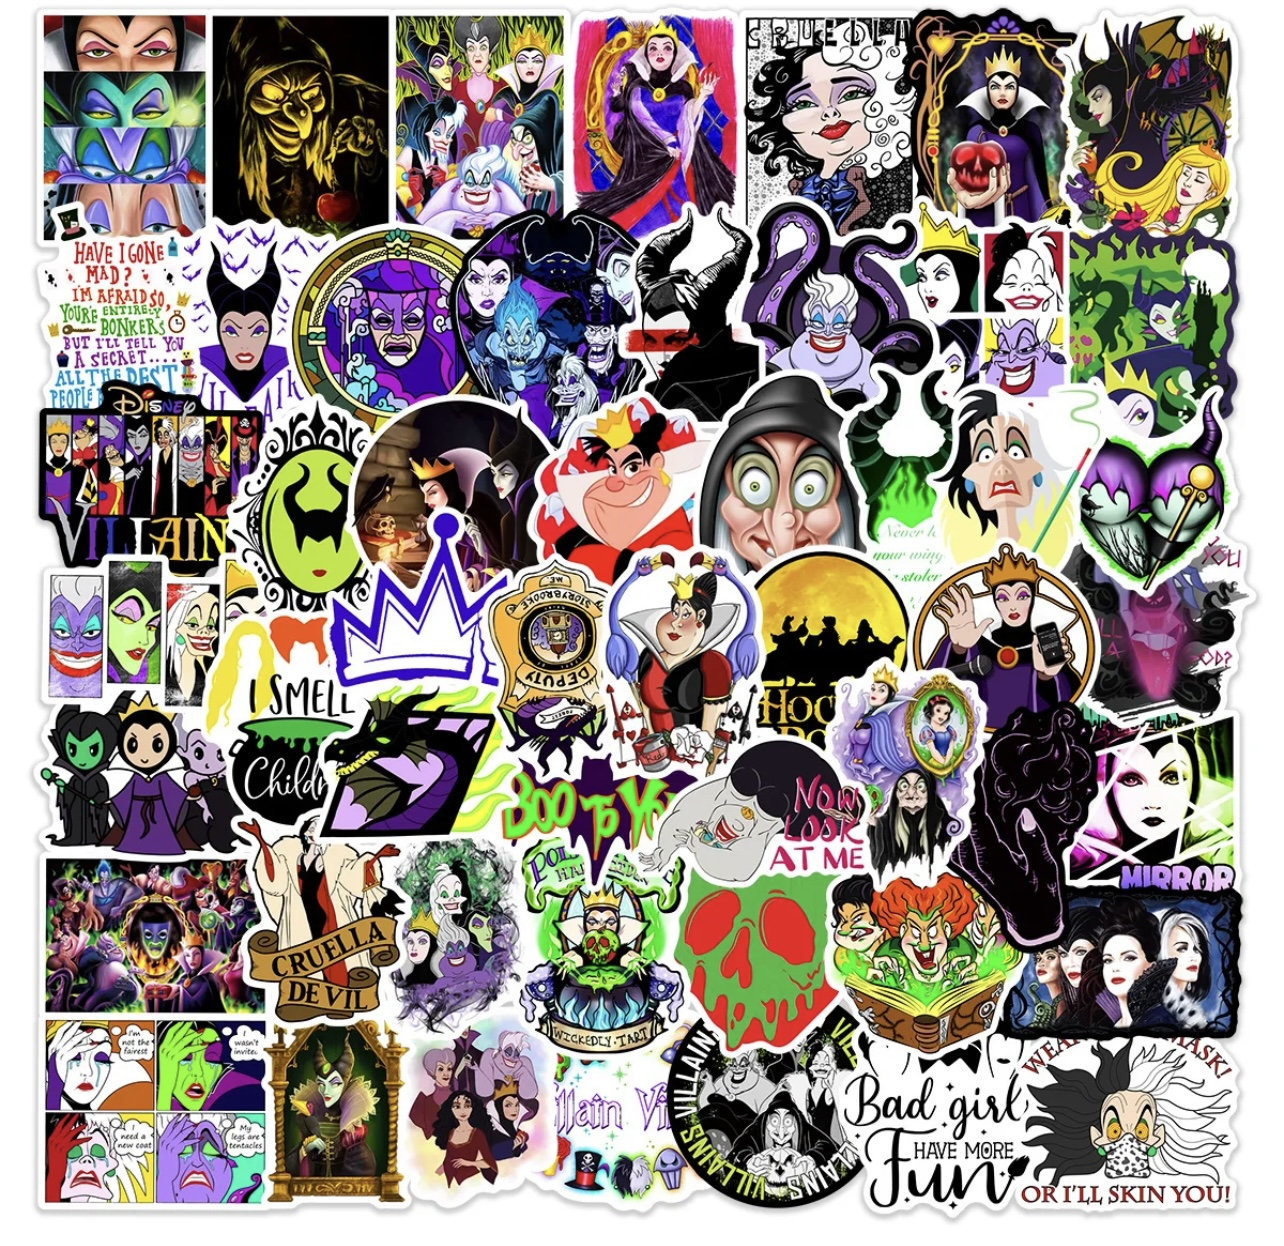 Stickers Disney Villains Evil Queen, Hook, Maleficent, Tremaine, Ursula,  Vanessa, Cruella, Hades, Yzma, Jafar, Gaston, Scar ,queen Hearts -   Canada